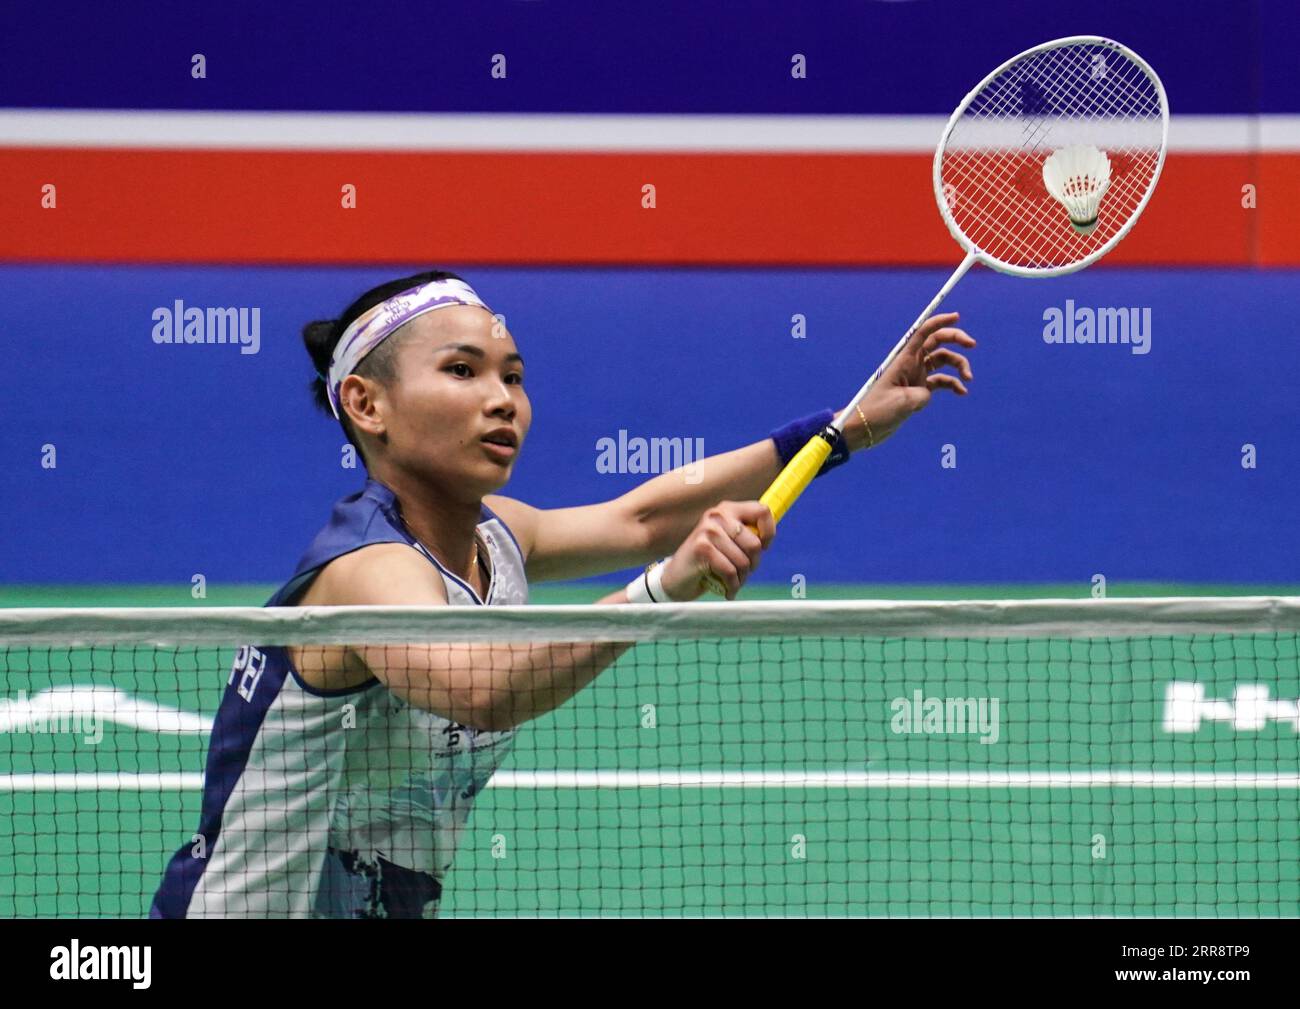 chinese taipei badminton live